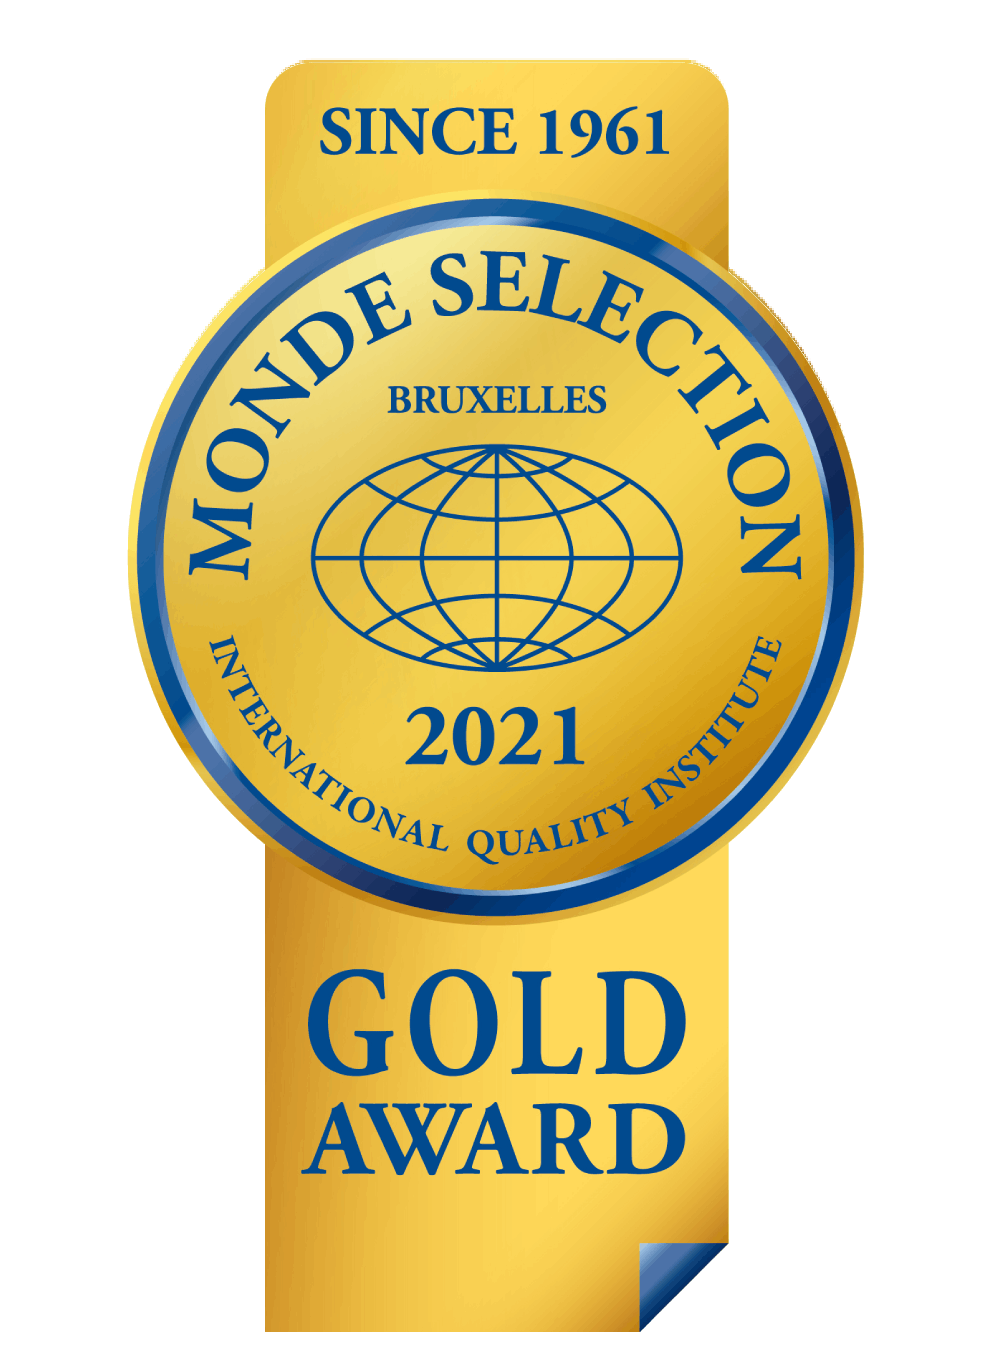 Gold Quality Award - Monde Selection 2021